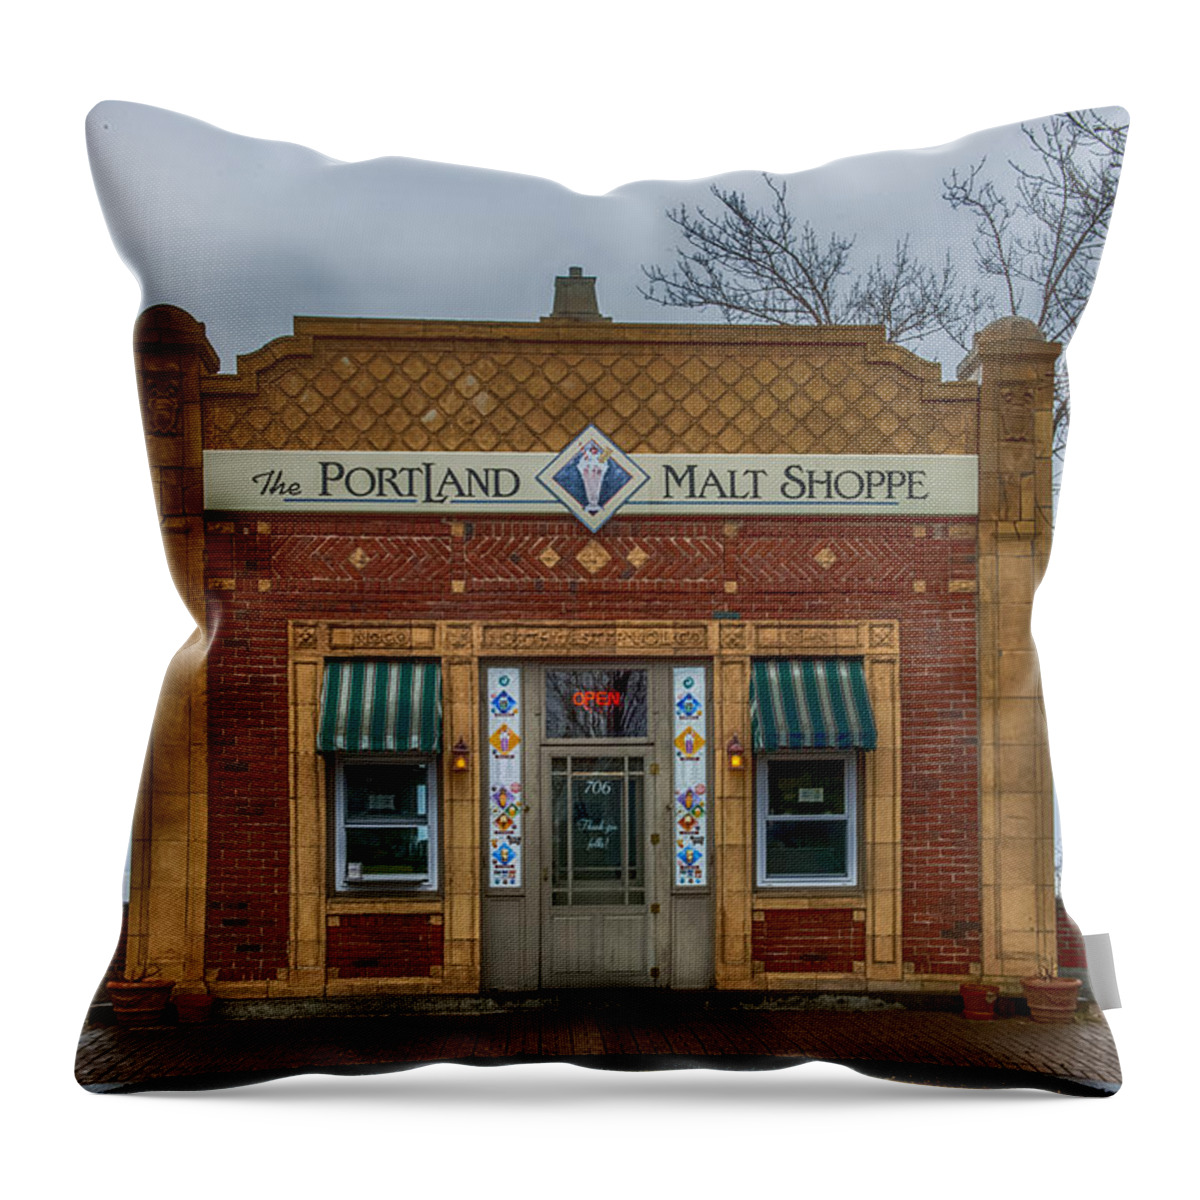 Lake Superior Throw Pillow featuring the photograph Portland Malt Shop by Paul Freidlund